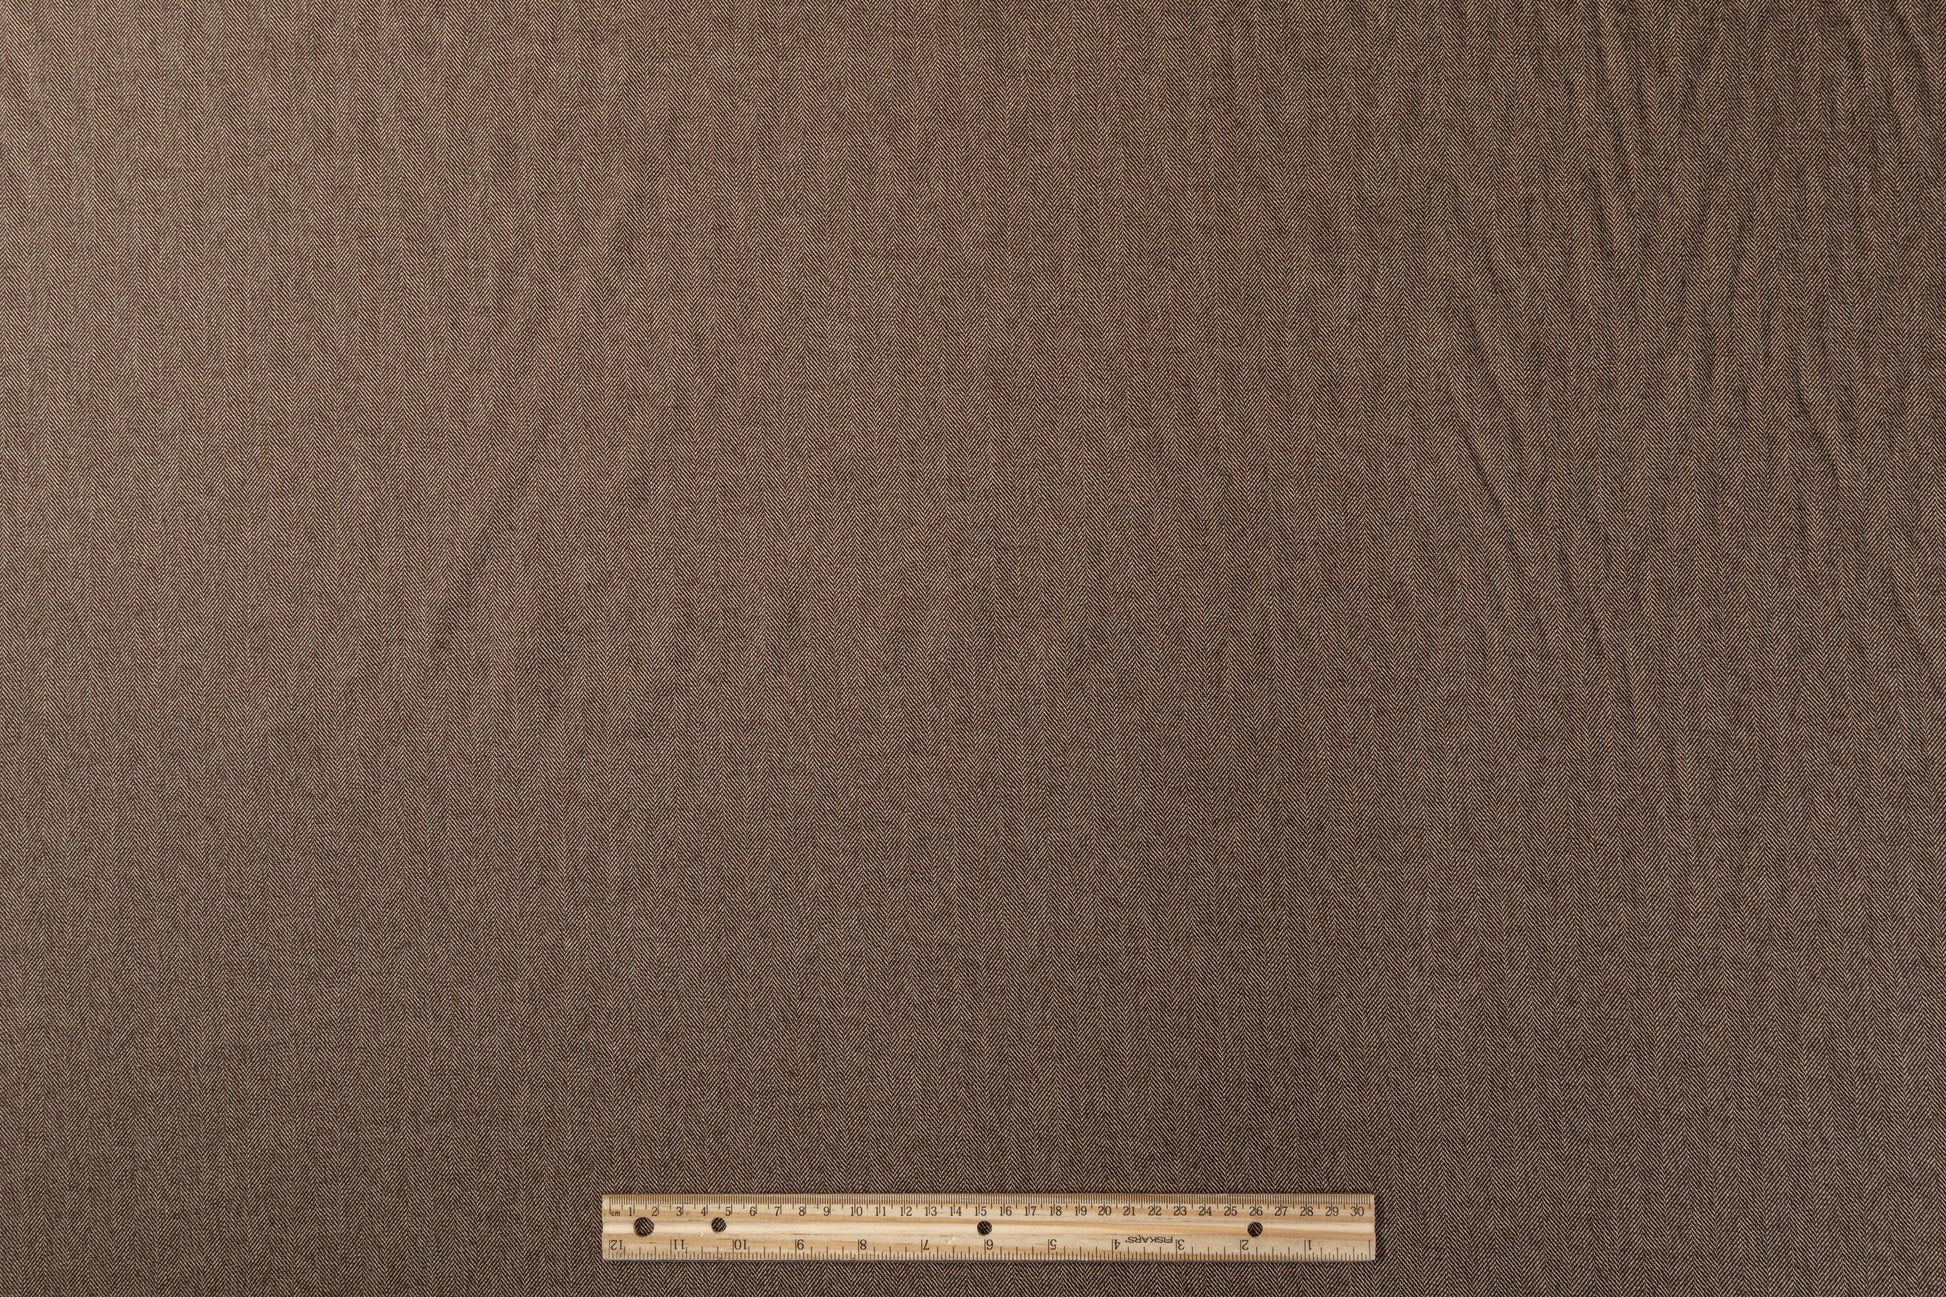 Herringbone Viscose Suiting - Brown - Prime Fabrics